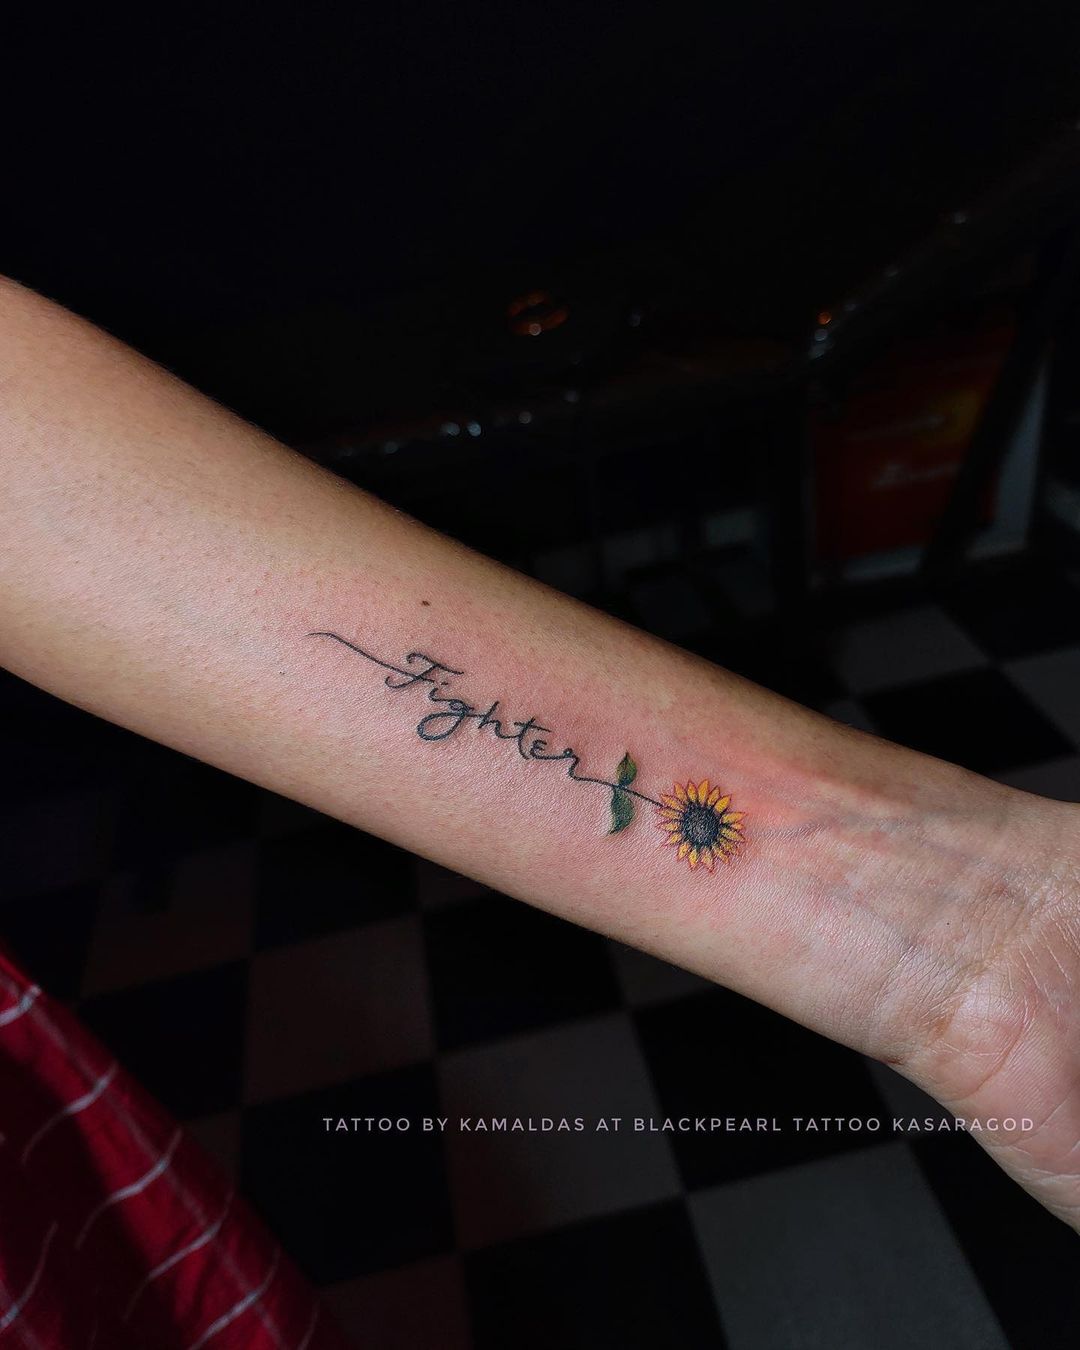 Meaningful Tattoo Designs - Worldwide Tattoo & Piercing Blog